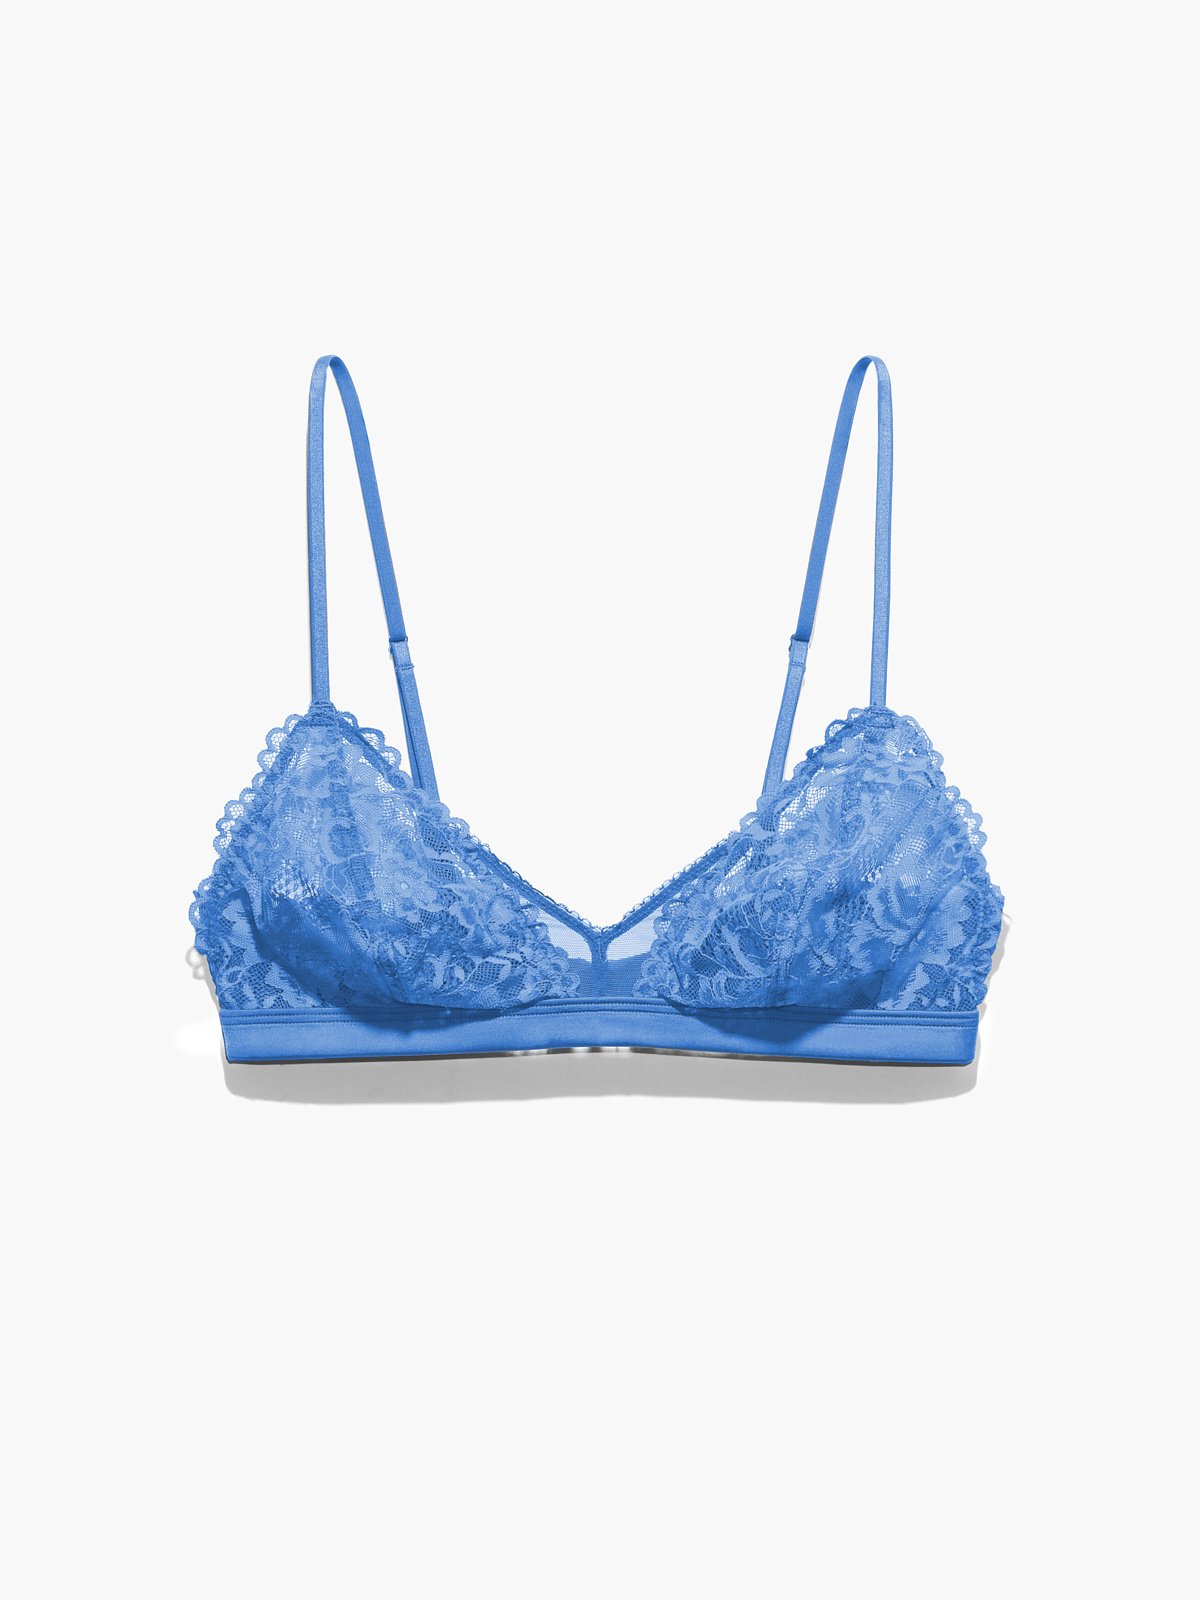 Bluebella Lilia sheer mesh triangle bralette in pale blue - ShopStyle Bras